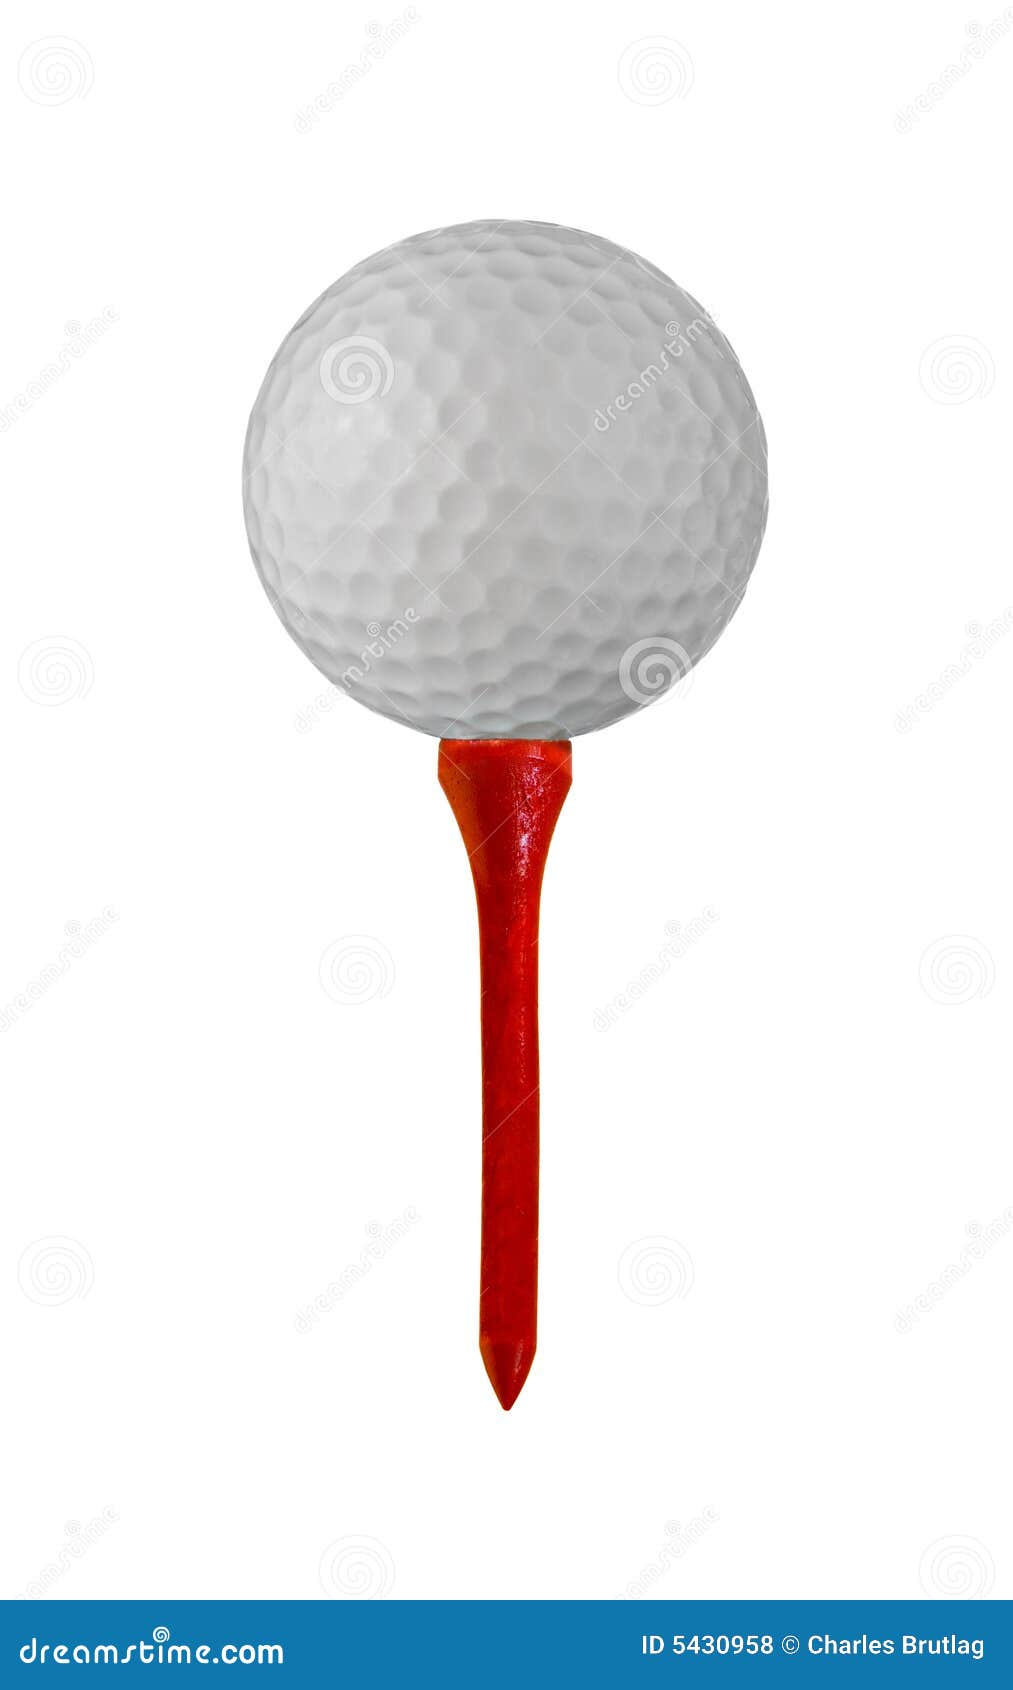 clipart golf ball on tee - photo #34